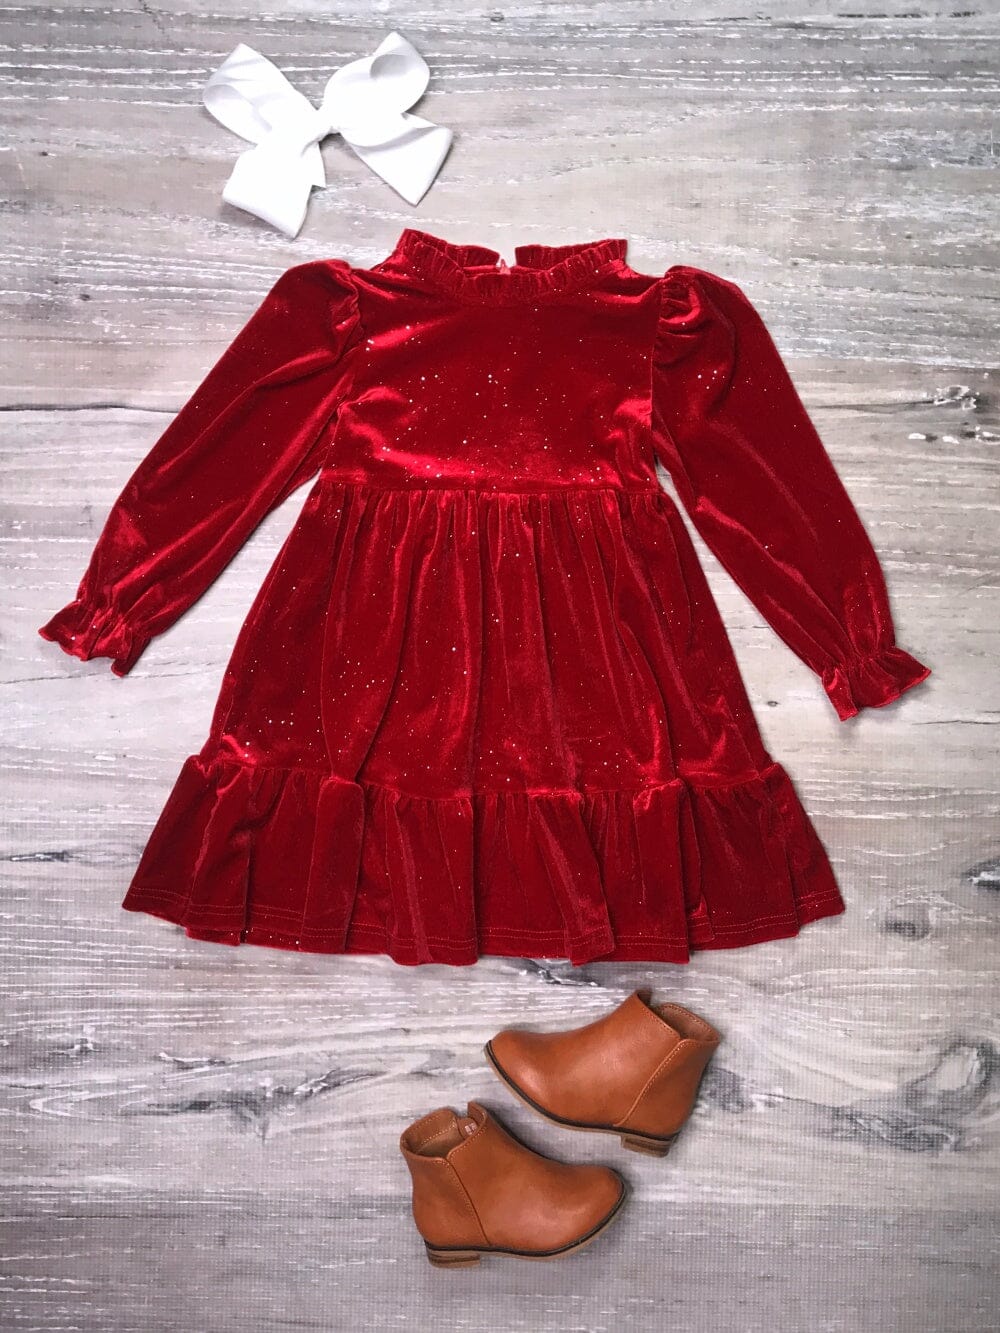 Ladies Christmas Special Hooters Bar Girl Vest & Hotpants Fancy Dress | eBay